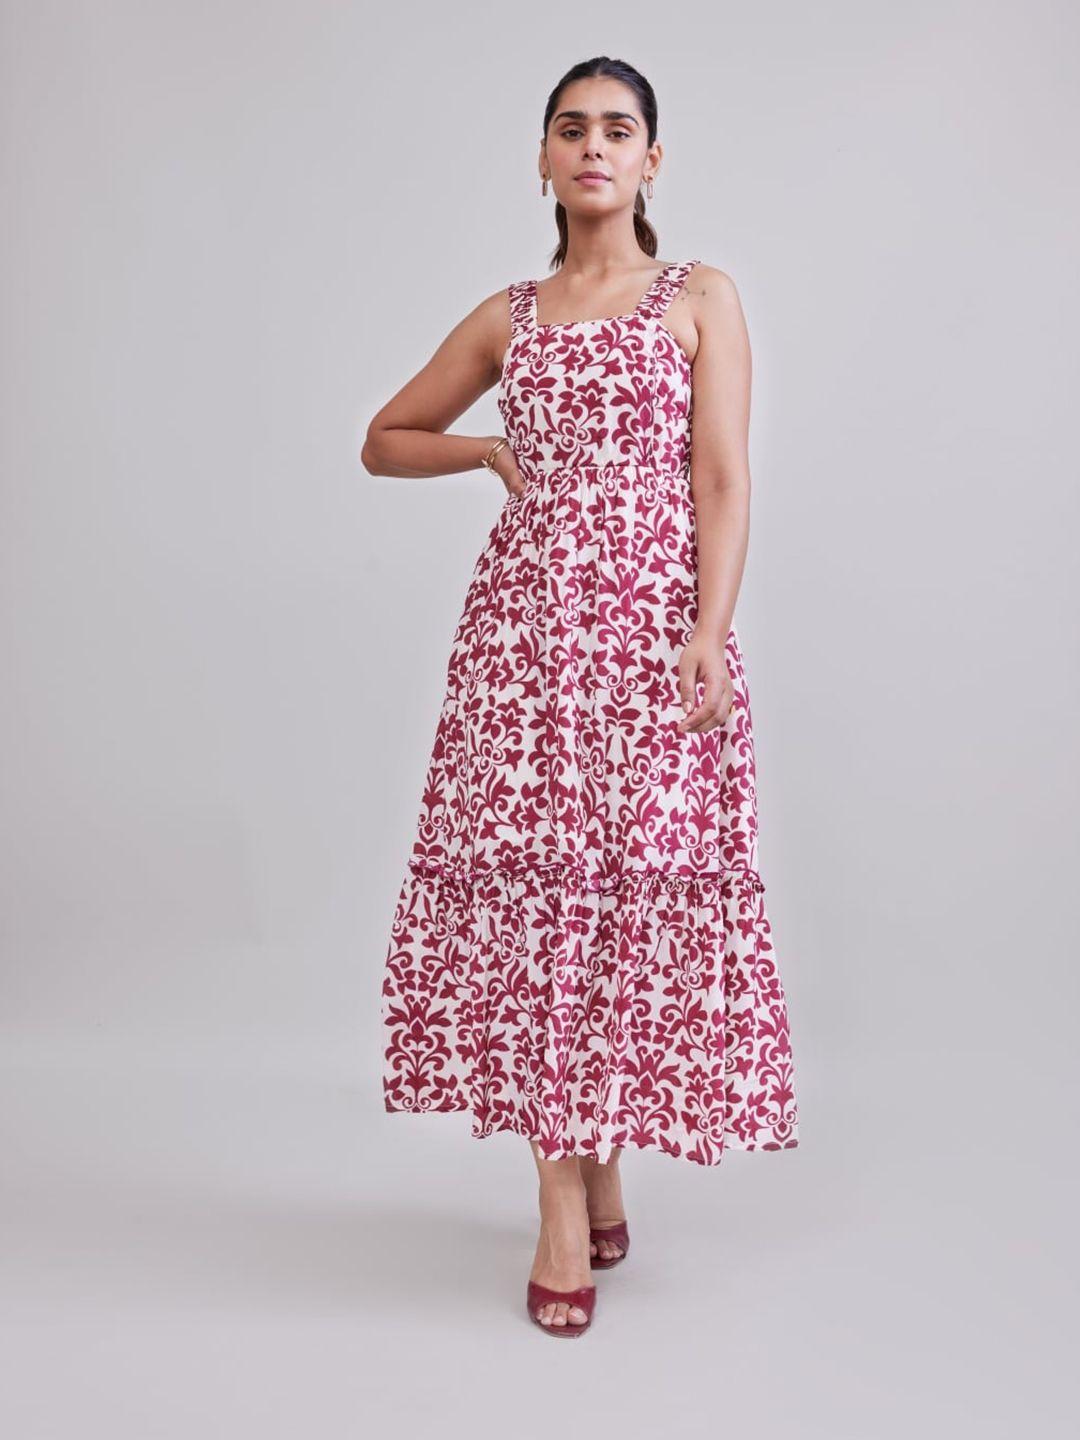 style island floral printed shoulder straps smocked & gathered fit & flare dress